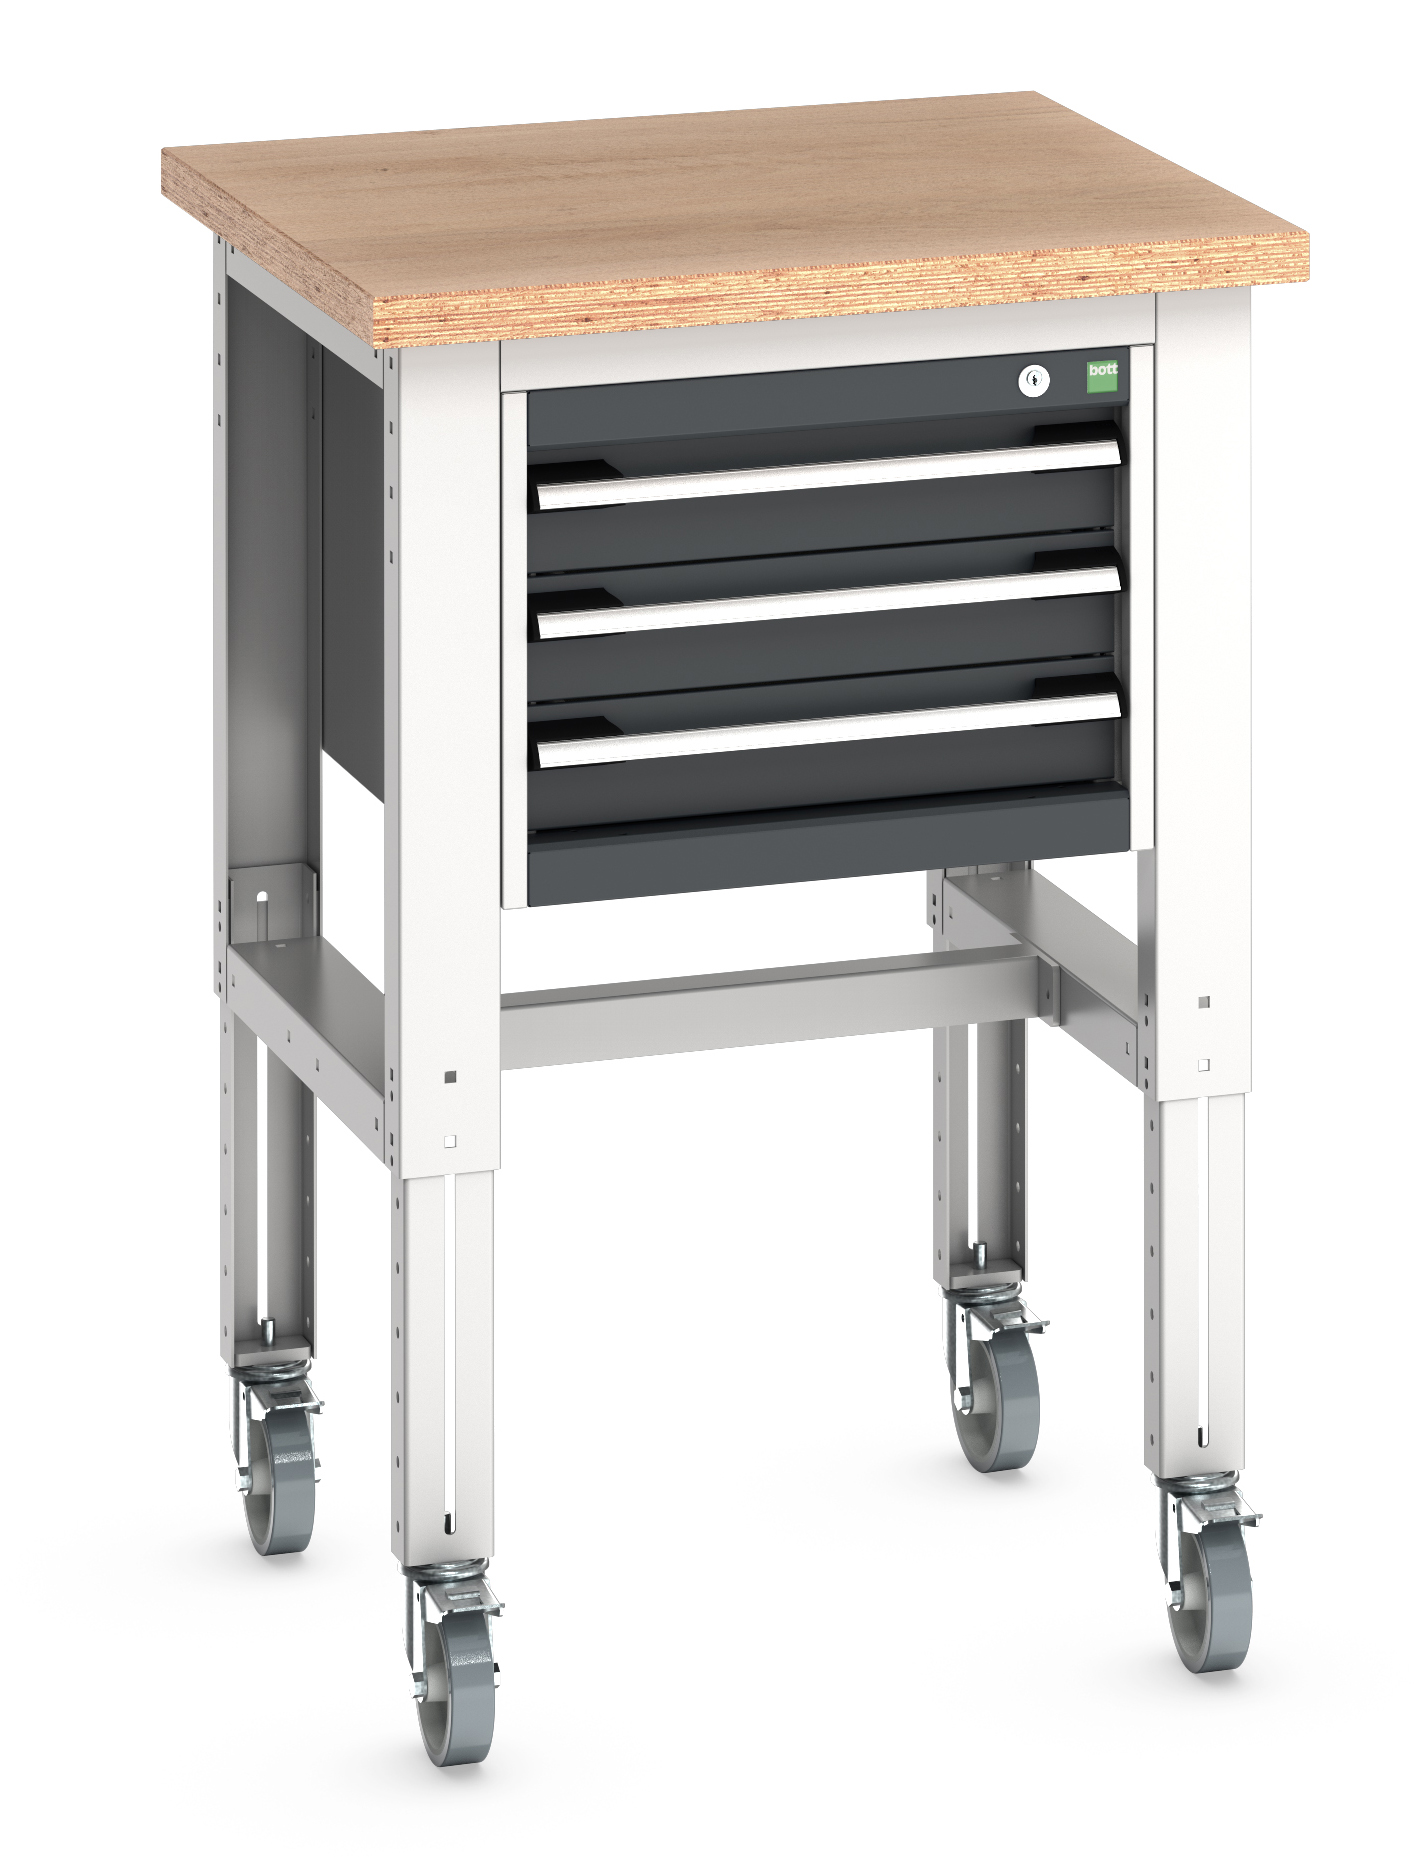 Bott Cubio Adjustable Height Mobile Workstand With 3 Drawer Cabinet - 41003527.19V